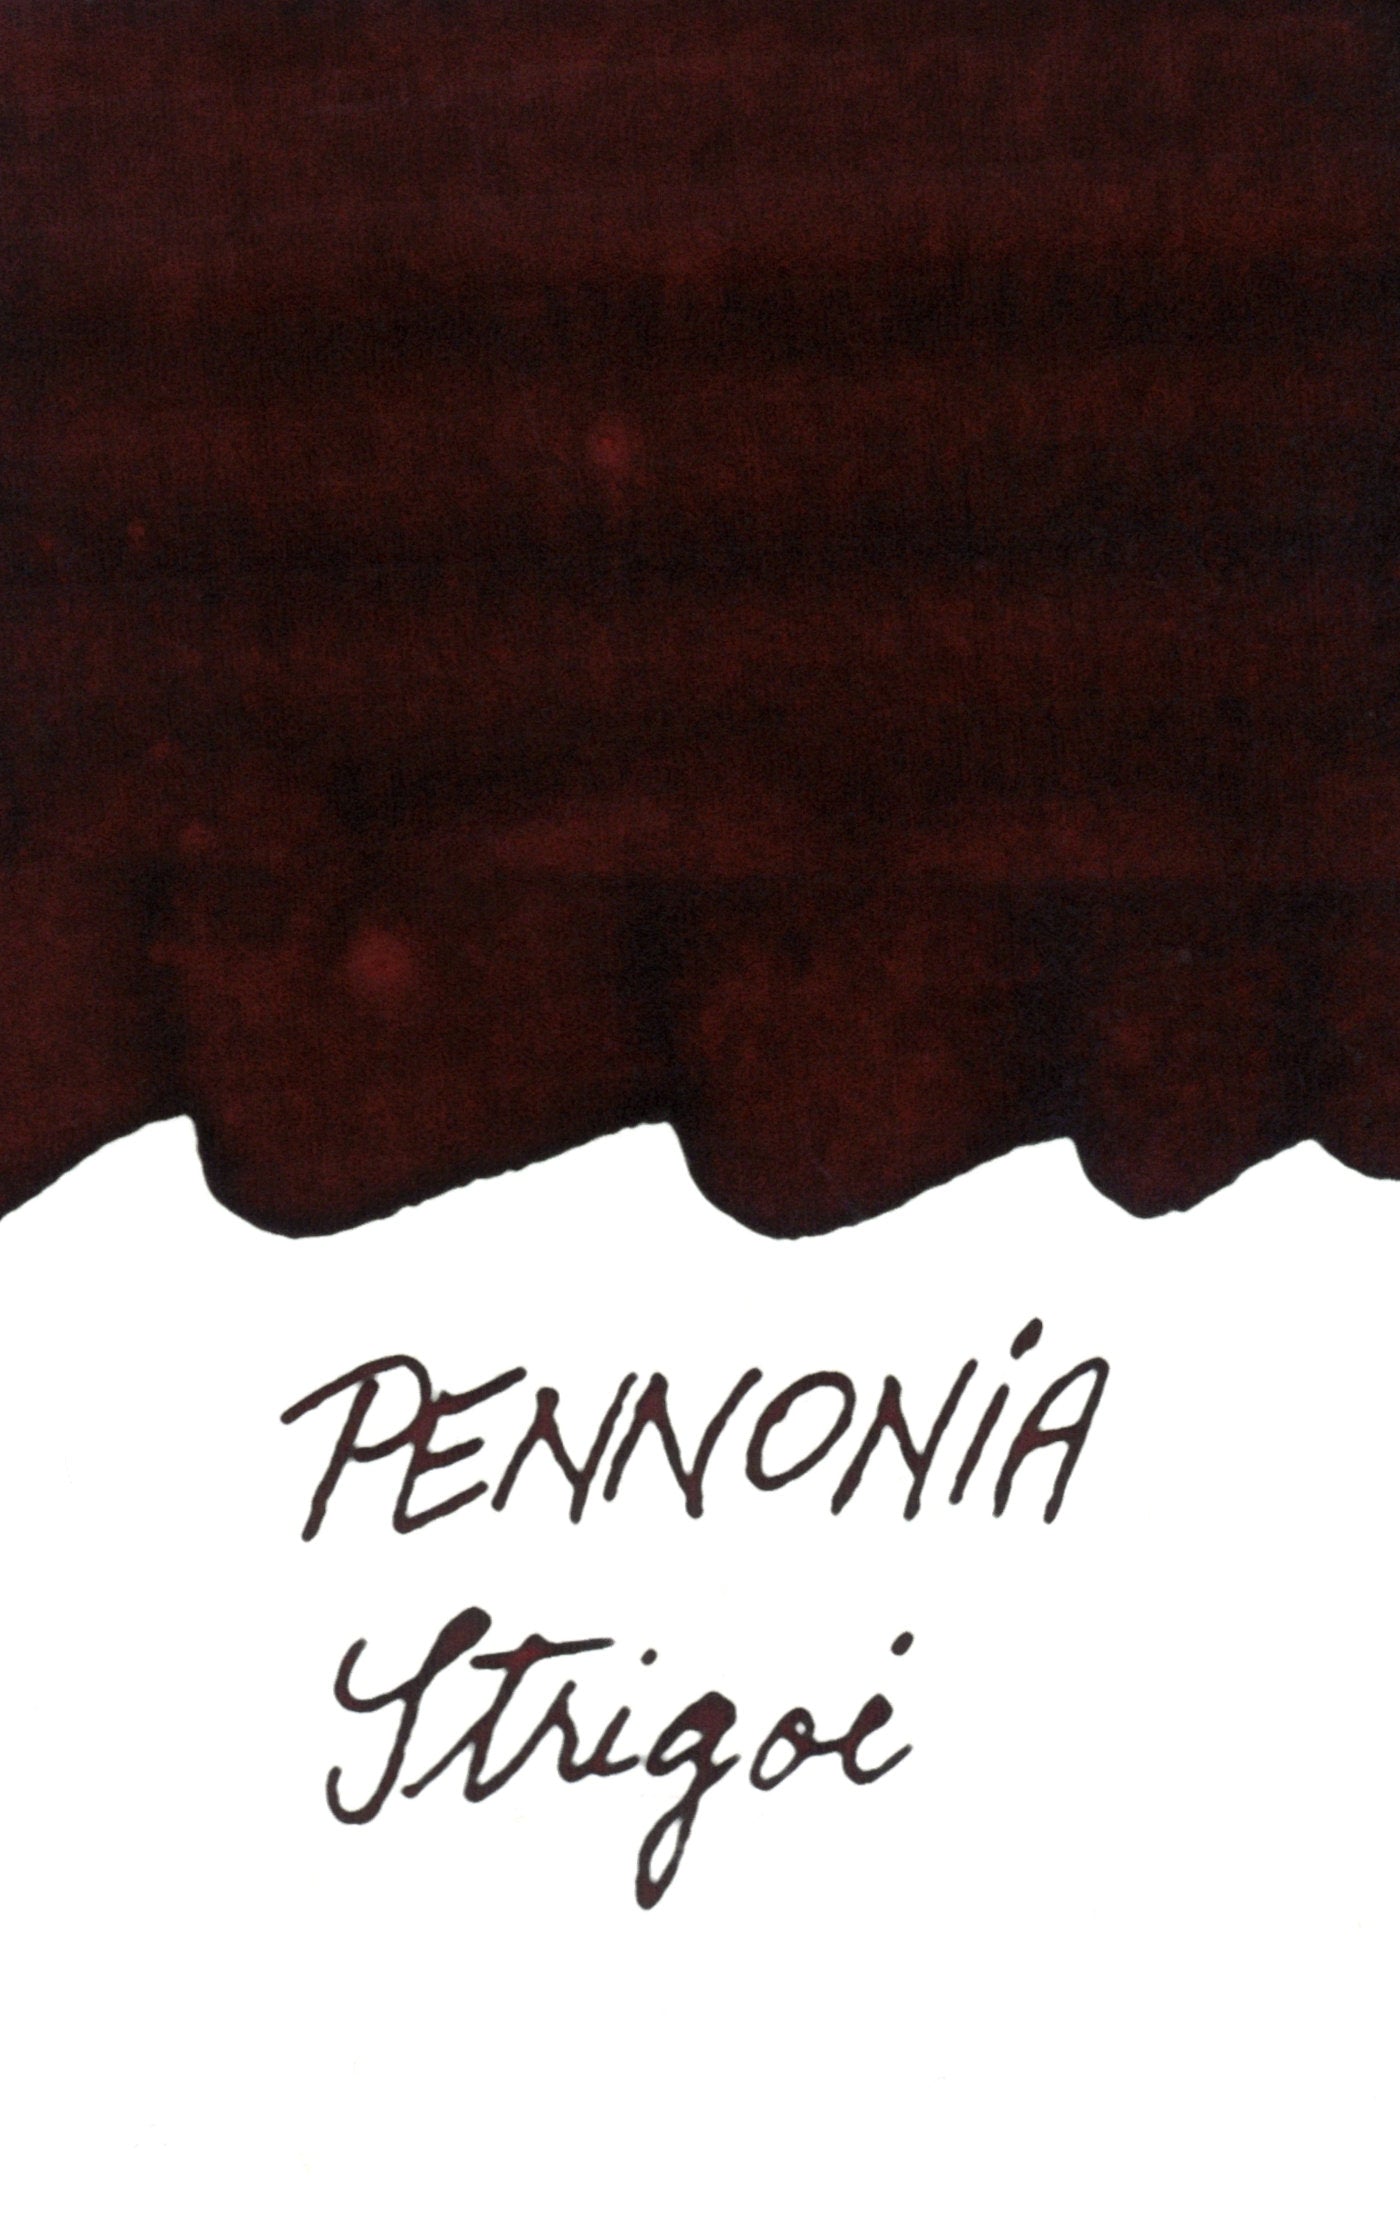 Pennonia Strigoi - limited Edition